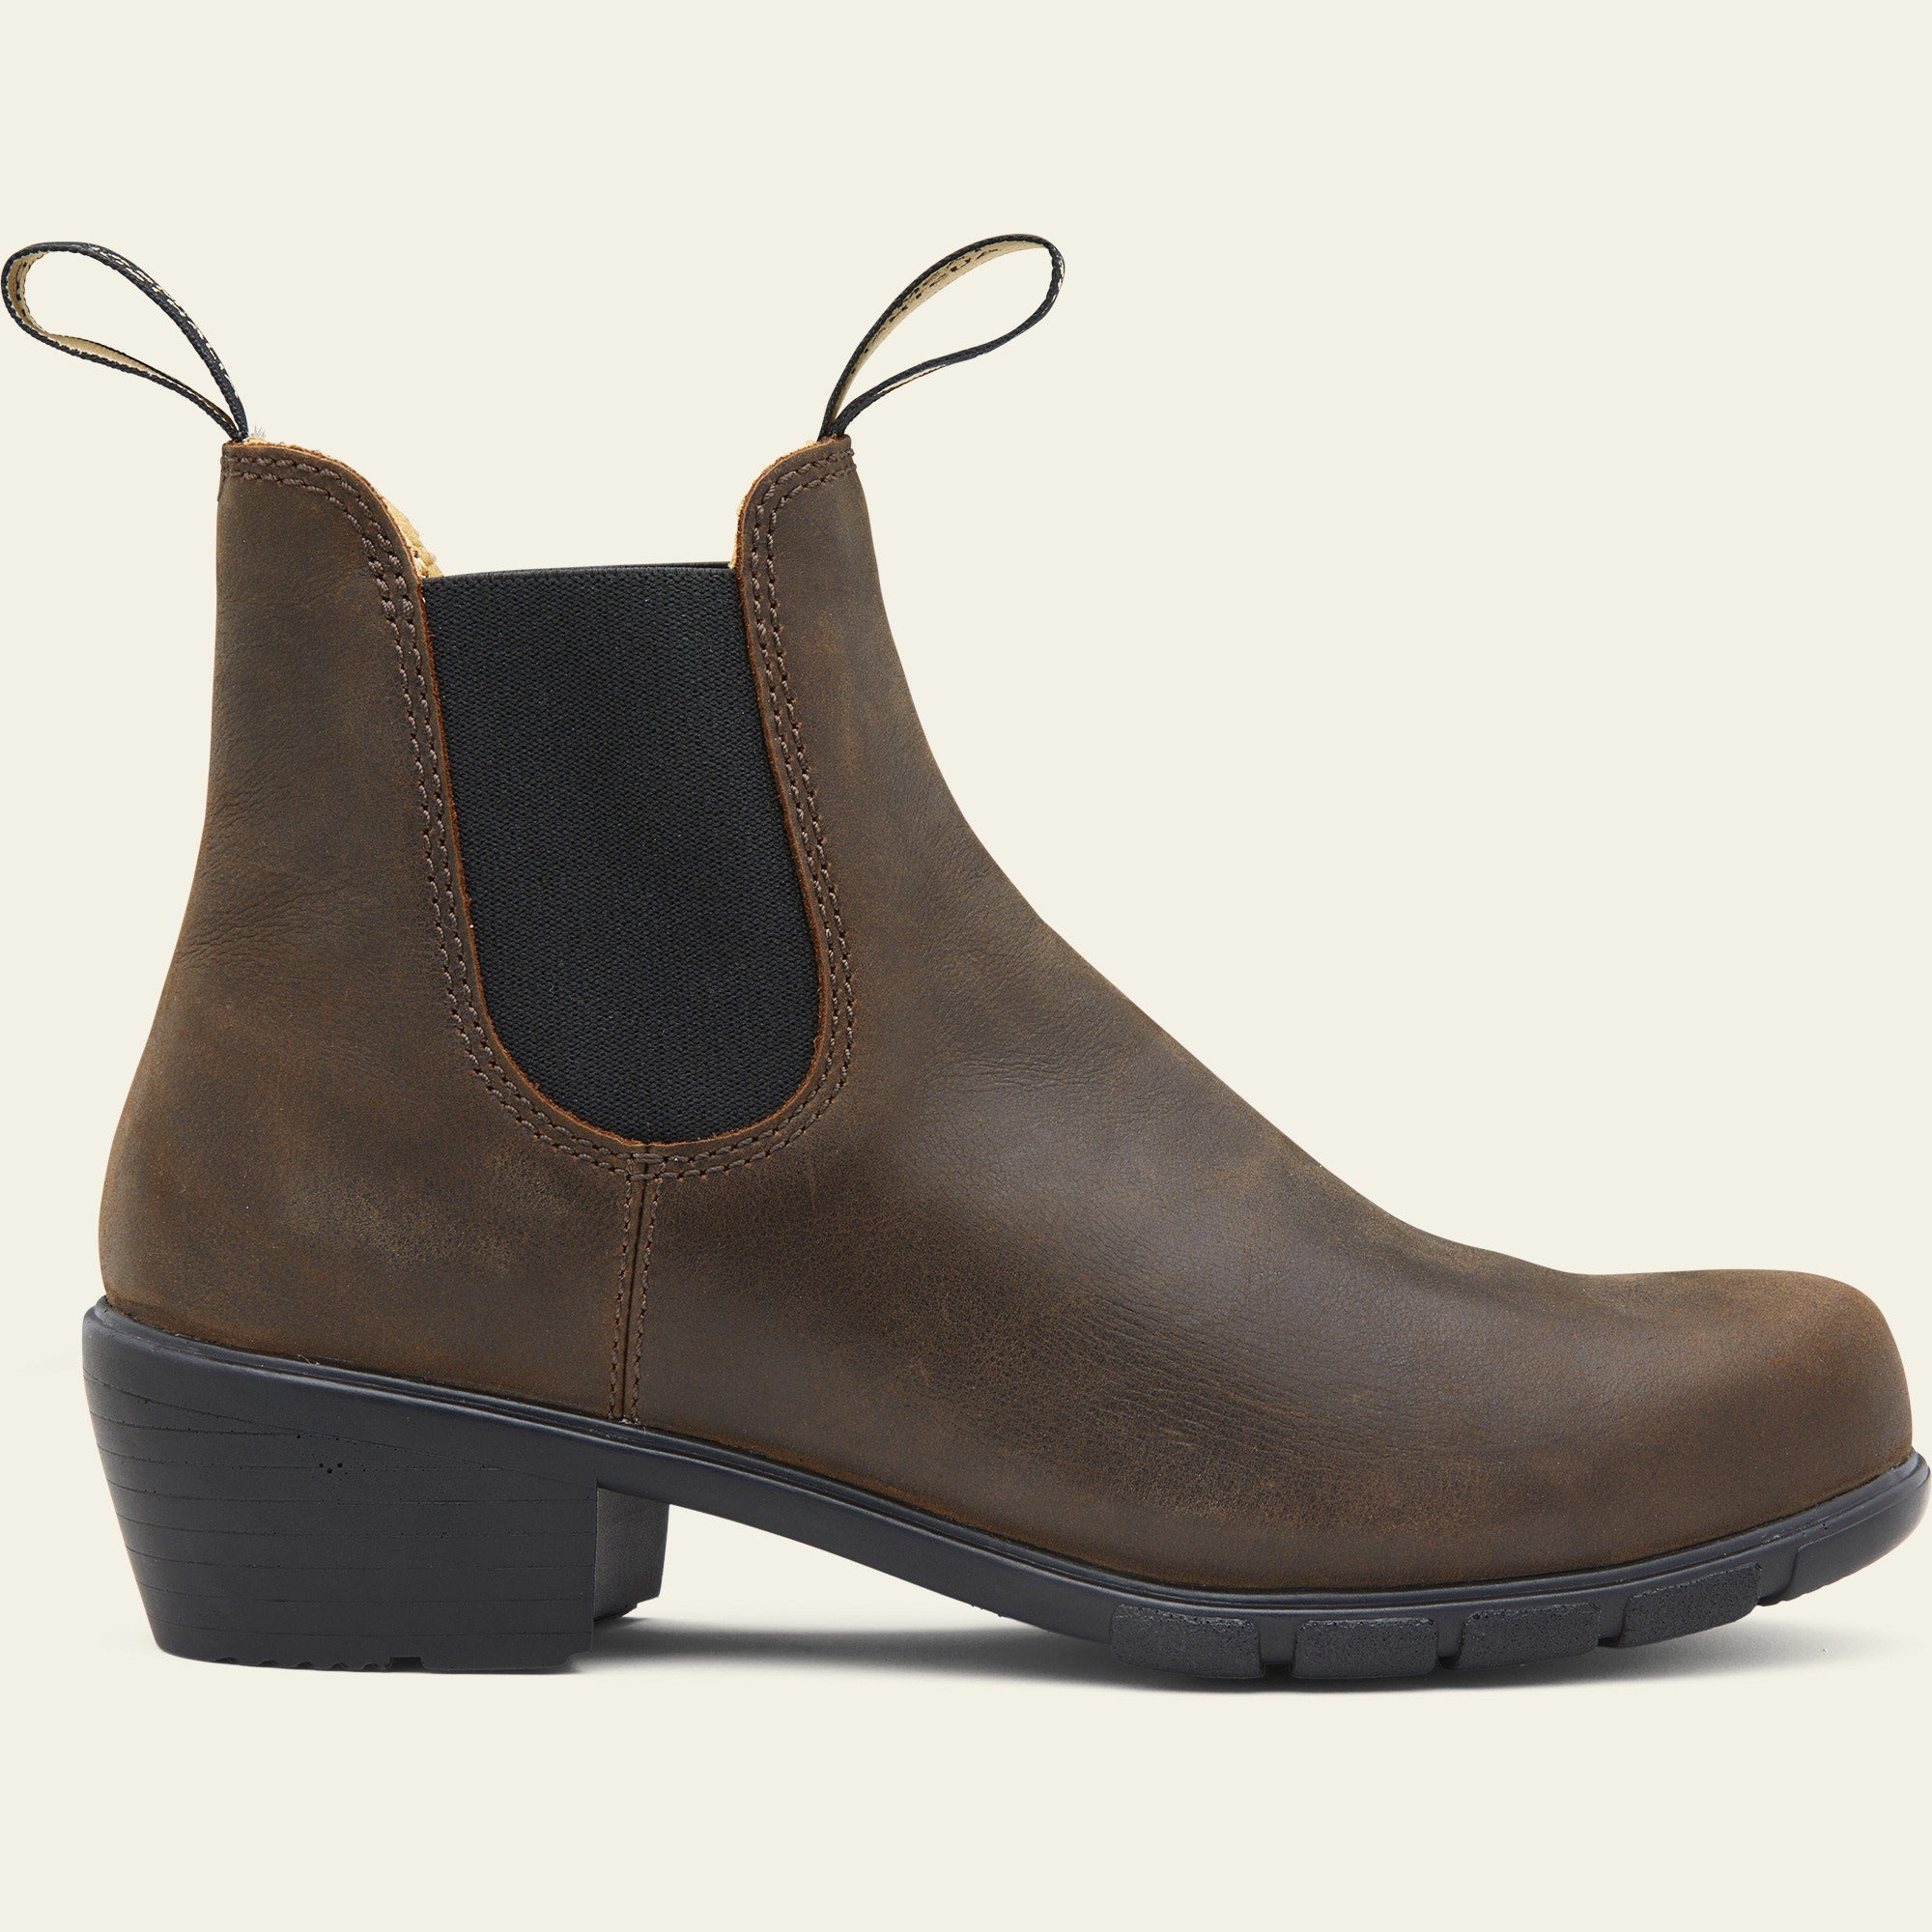 Women's Heeled Boots #1673 Antique Brown